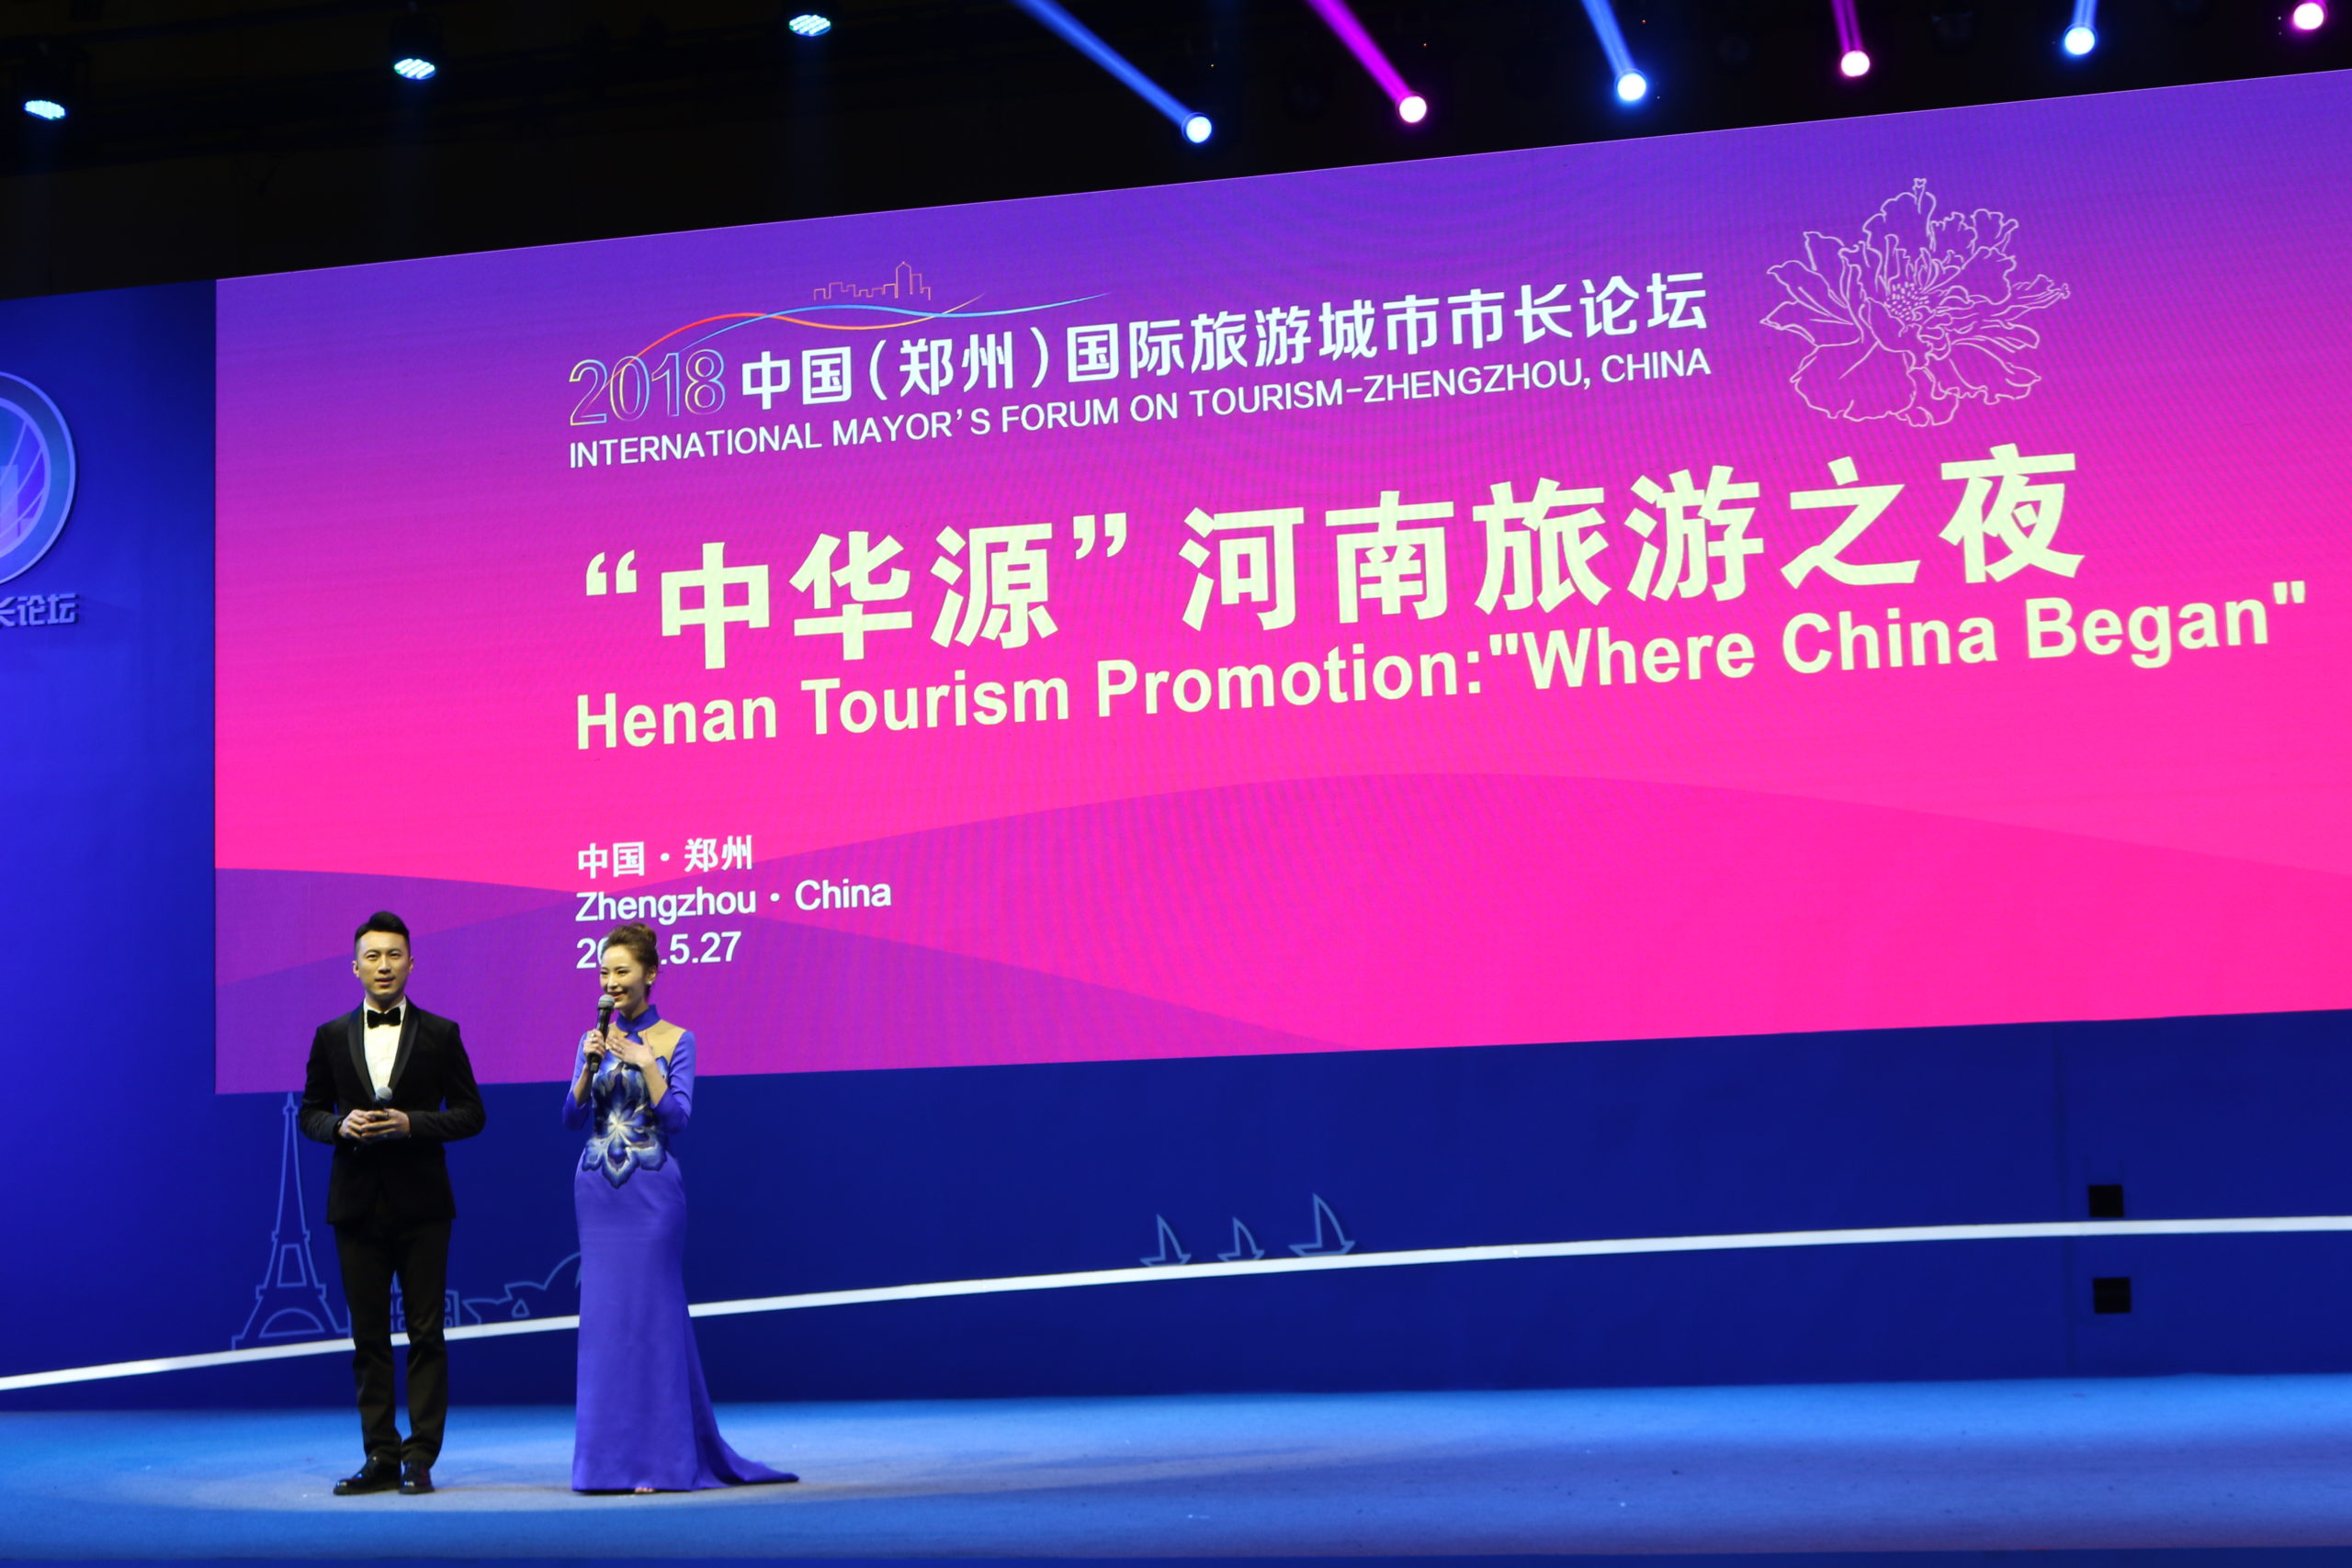 International Mayors’ Forum on Tourism 2018